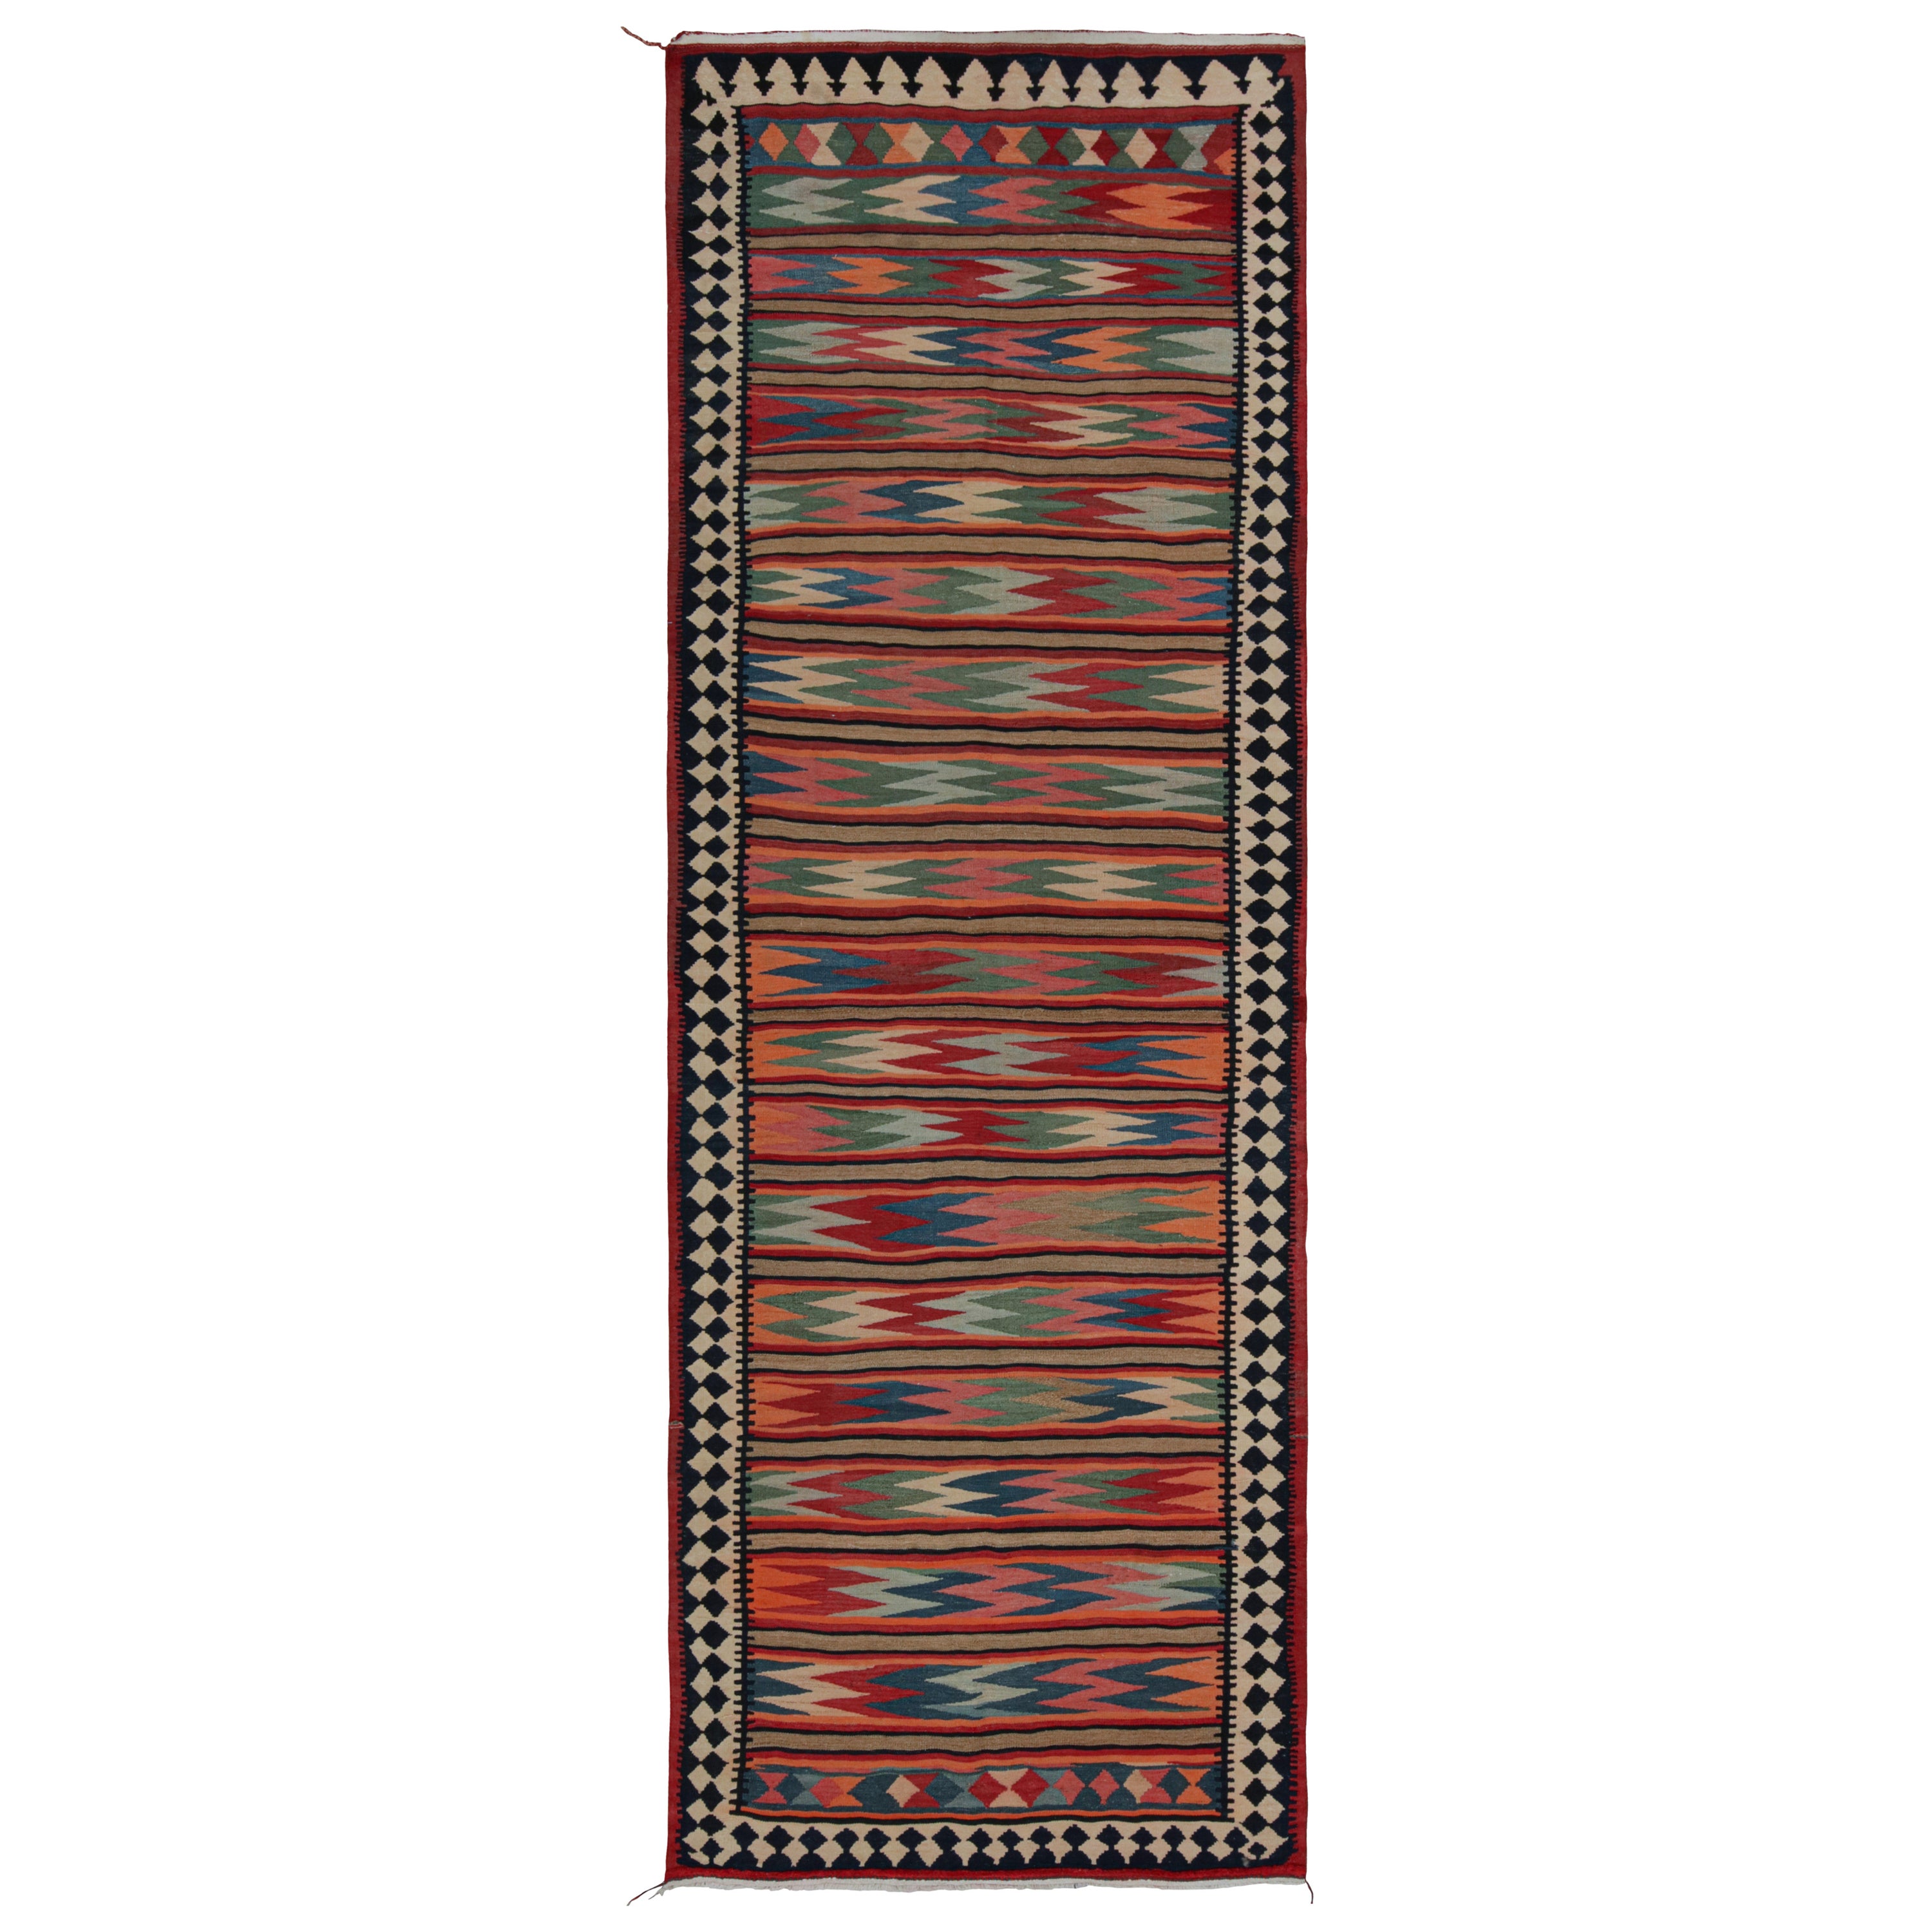 Vintage Afghani tribal Kilim rug, with Geometric patterns, from Rug & Kilim For Sale